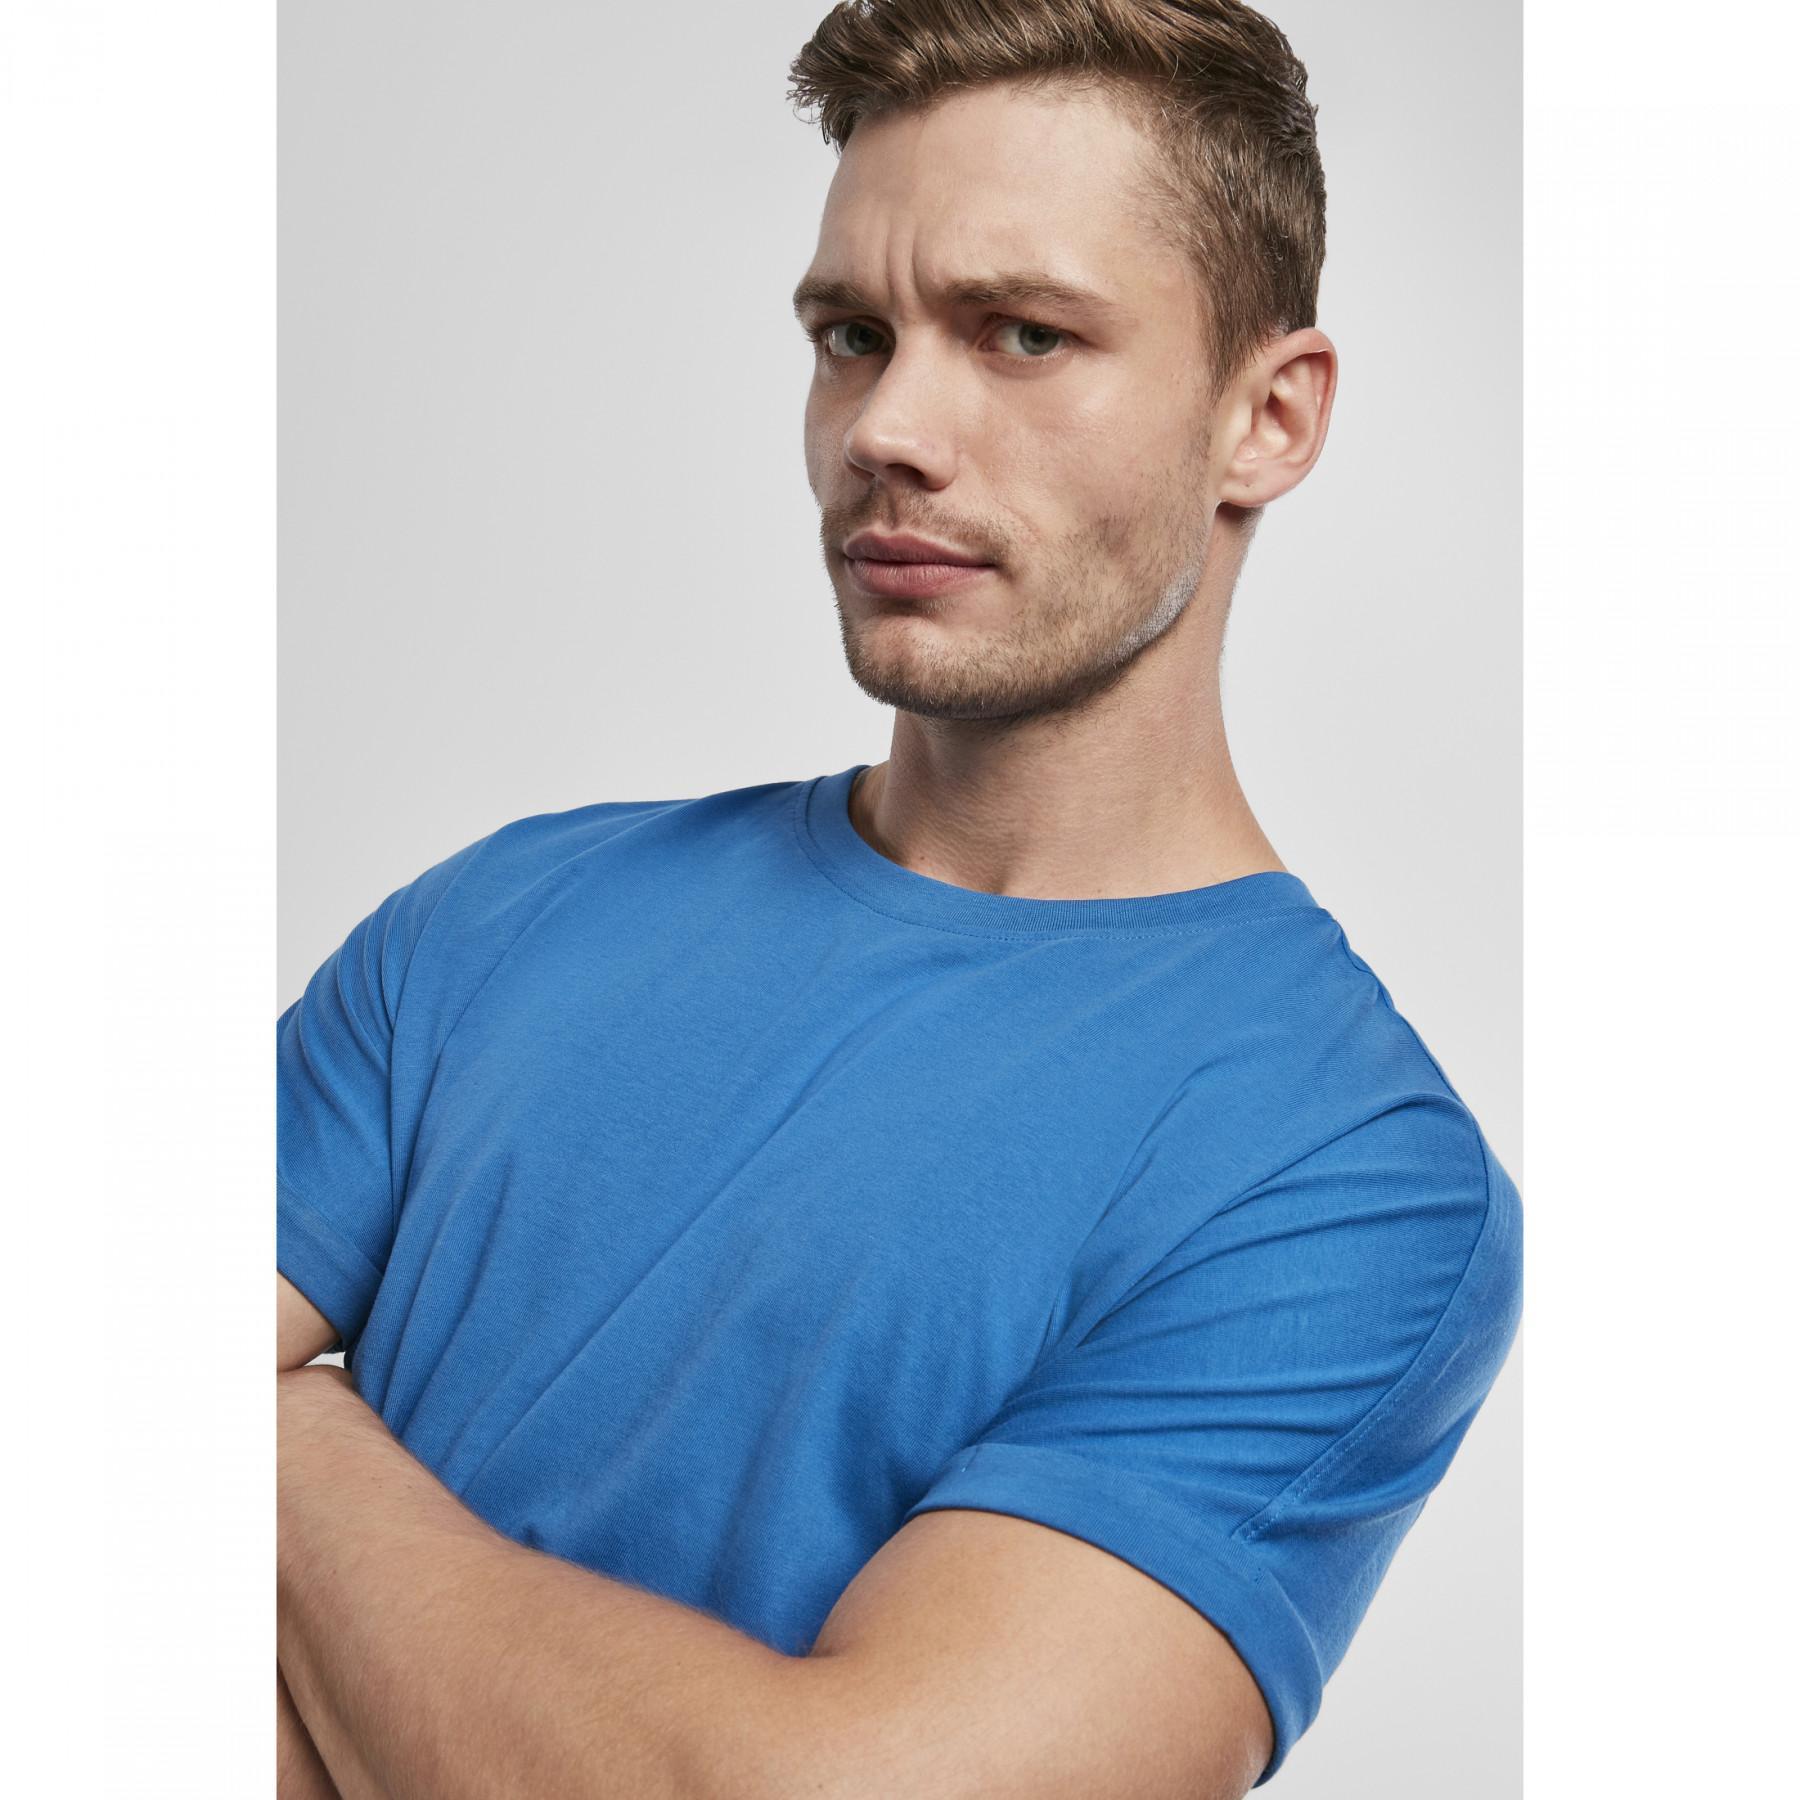 - Long - Urban shirts Man and - Classics Lifestyle T-shirt Turnup Polo Shaped Tee T-shirts